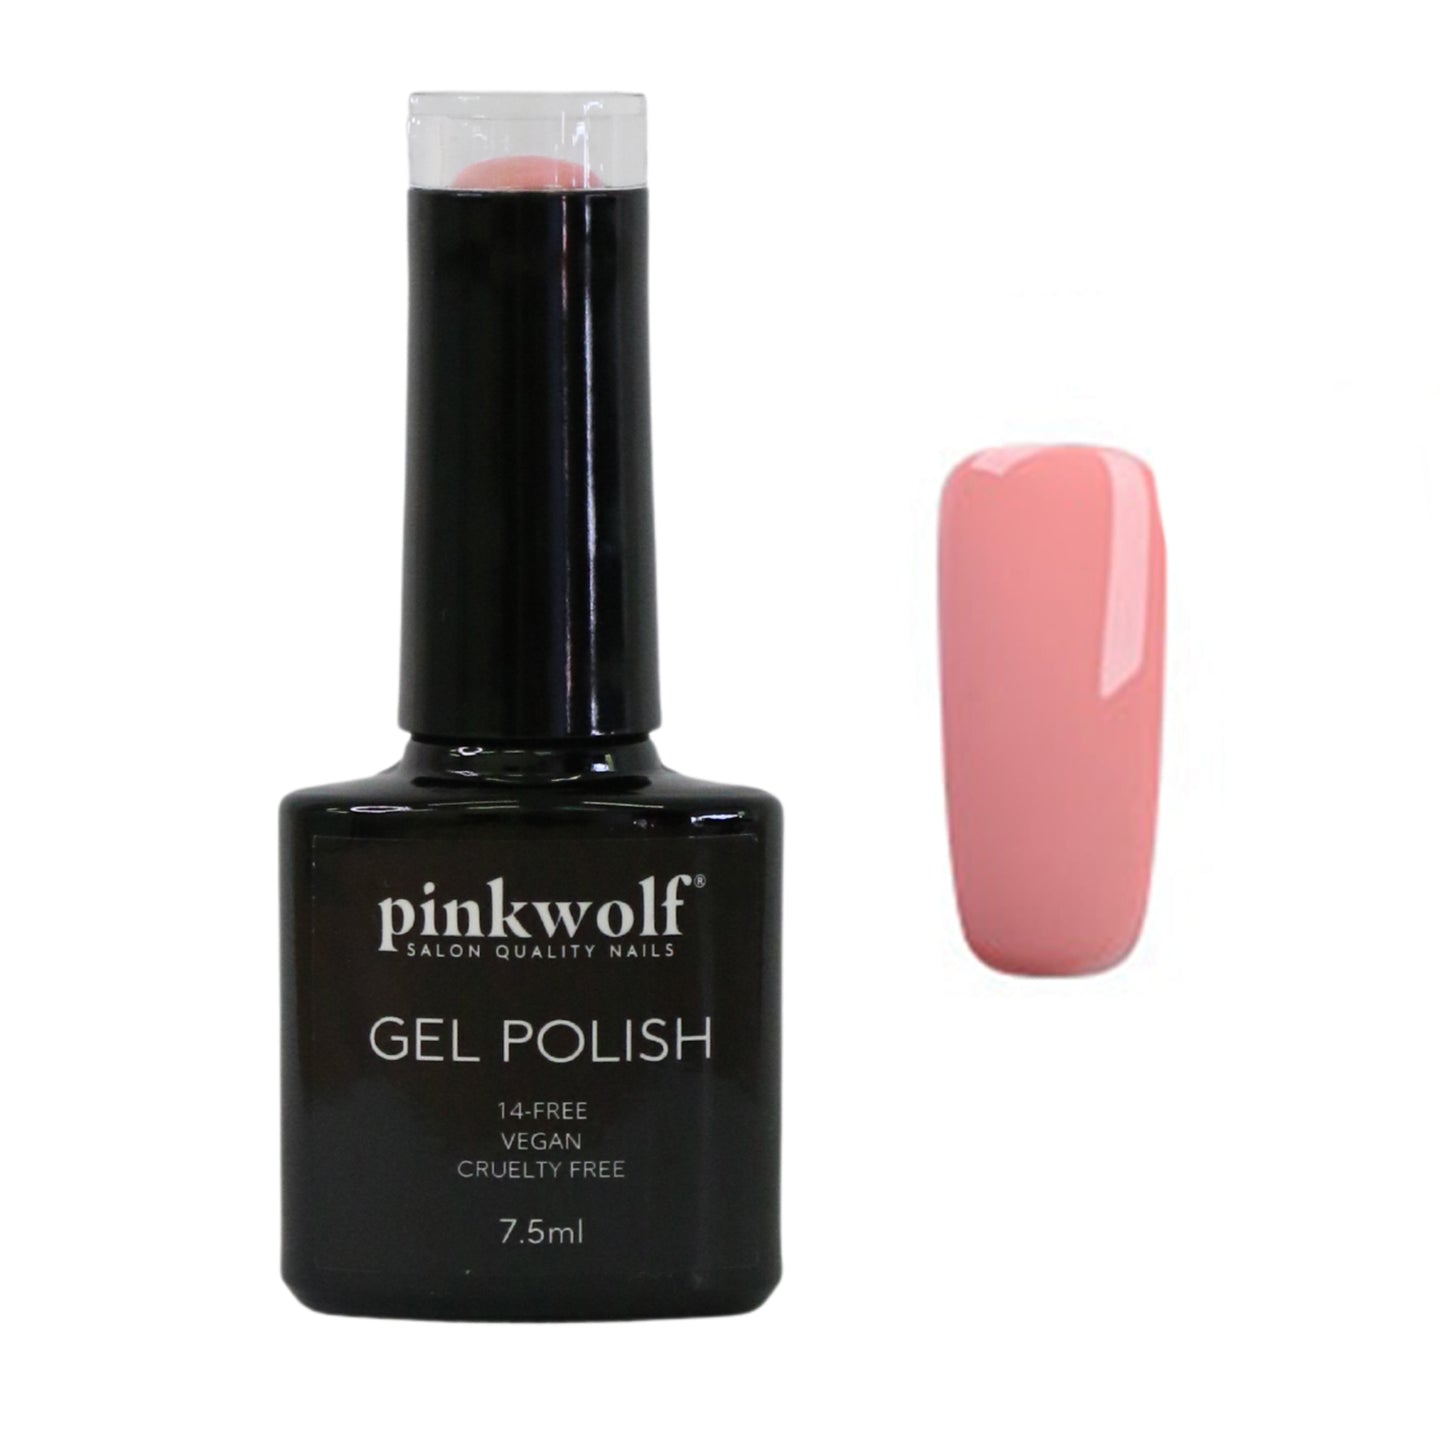 Pinkwolf peach gel nail polish 7.5ml bottle 